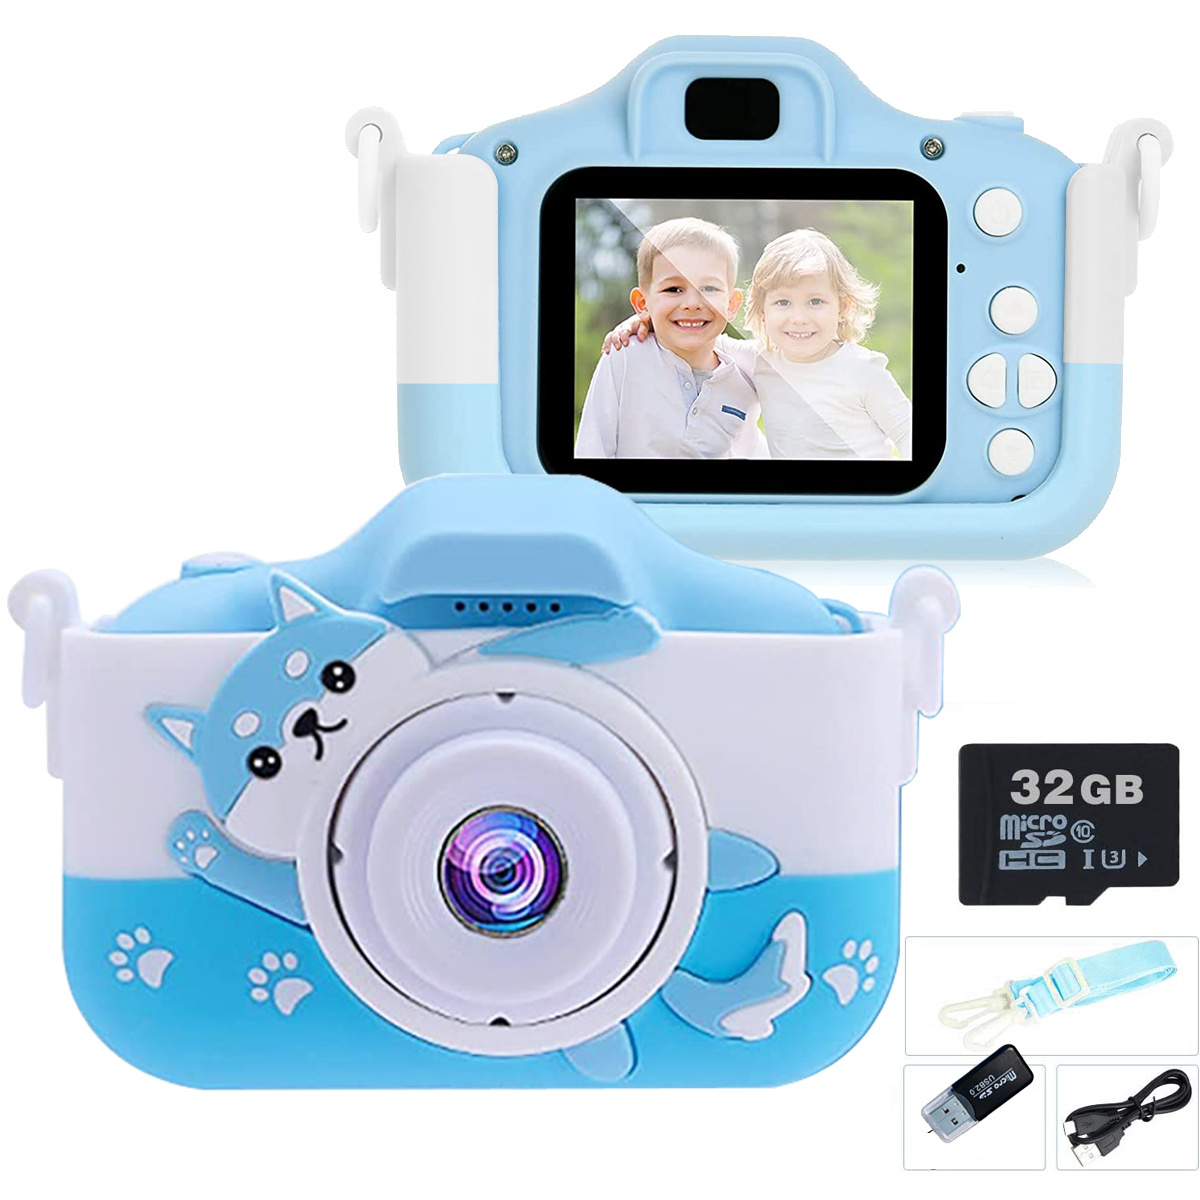  Digital Camera, FHD 1080P Digital Camera for Kids